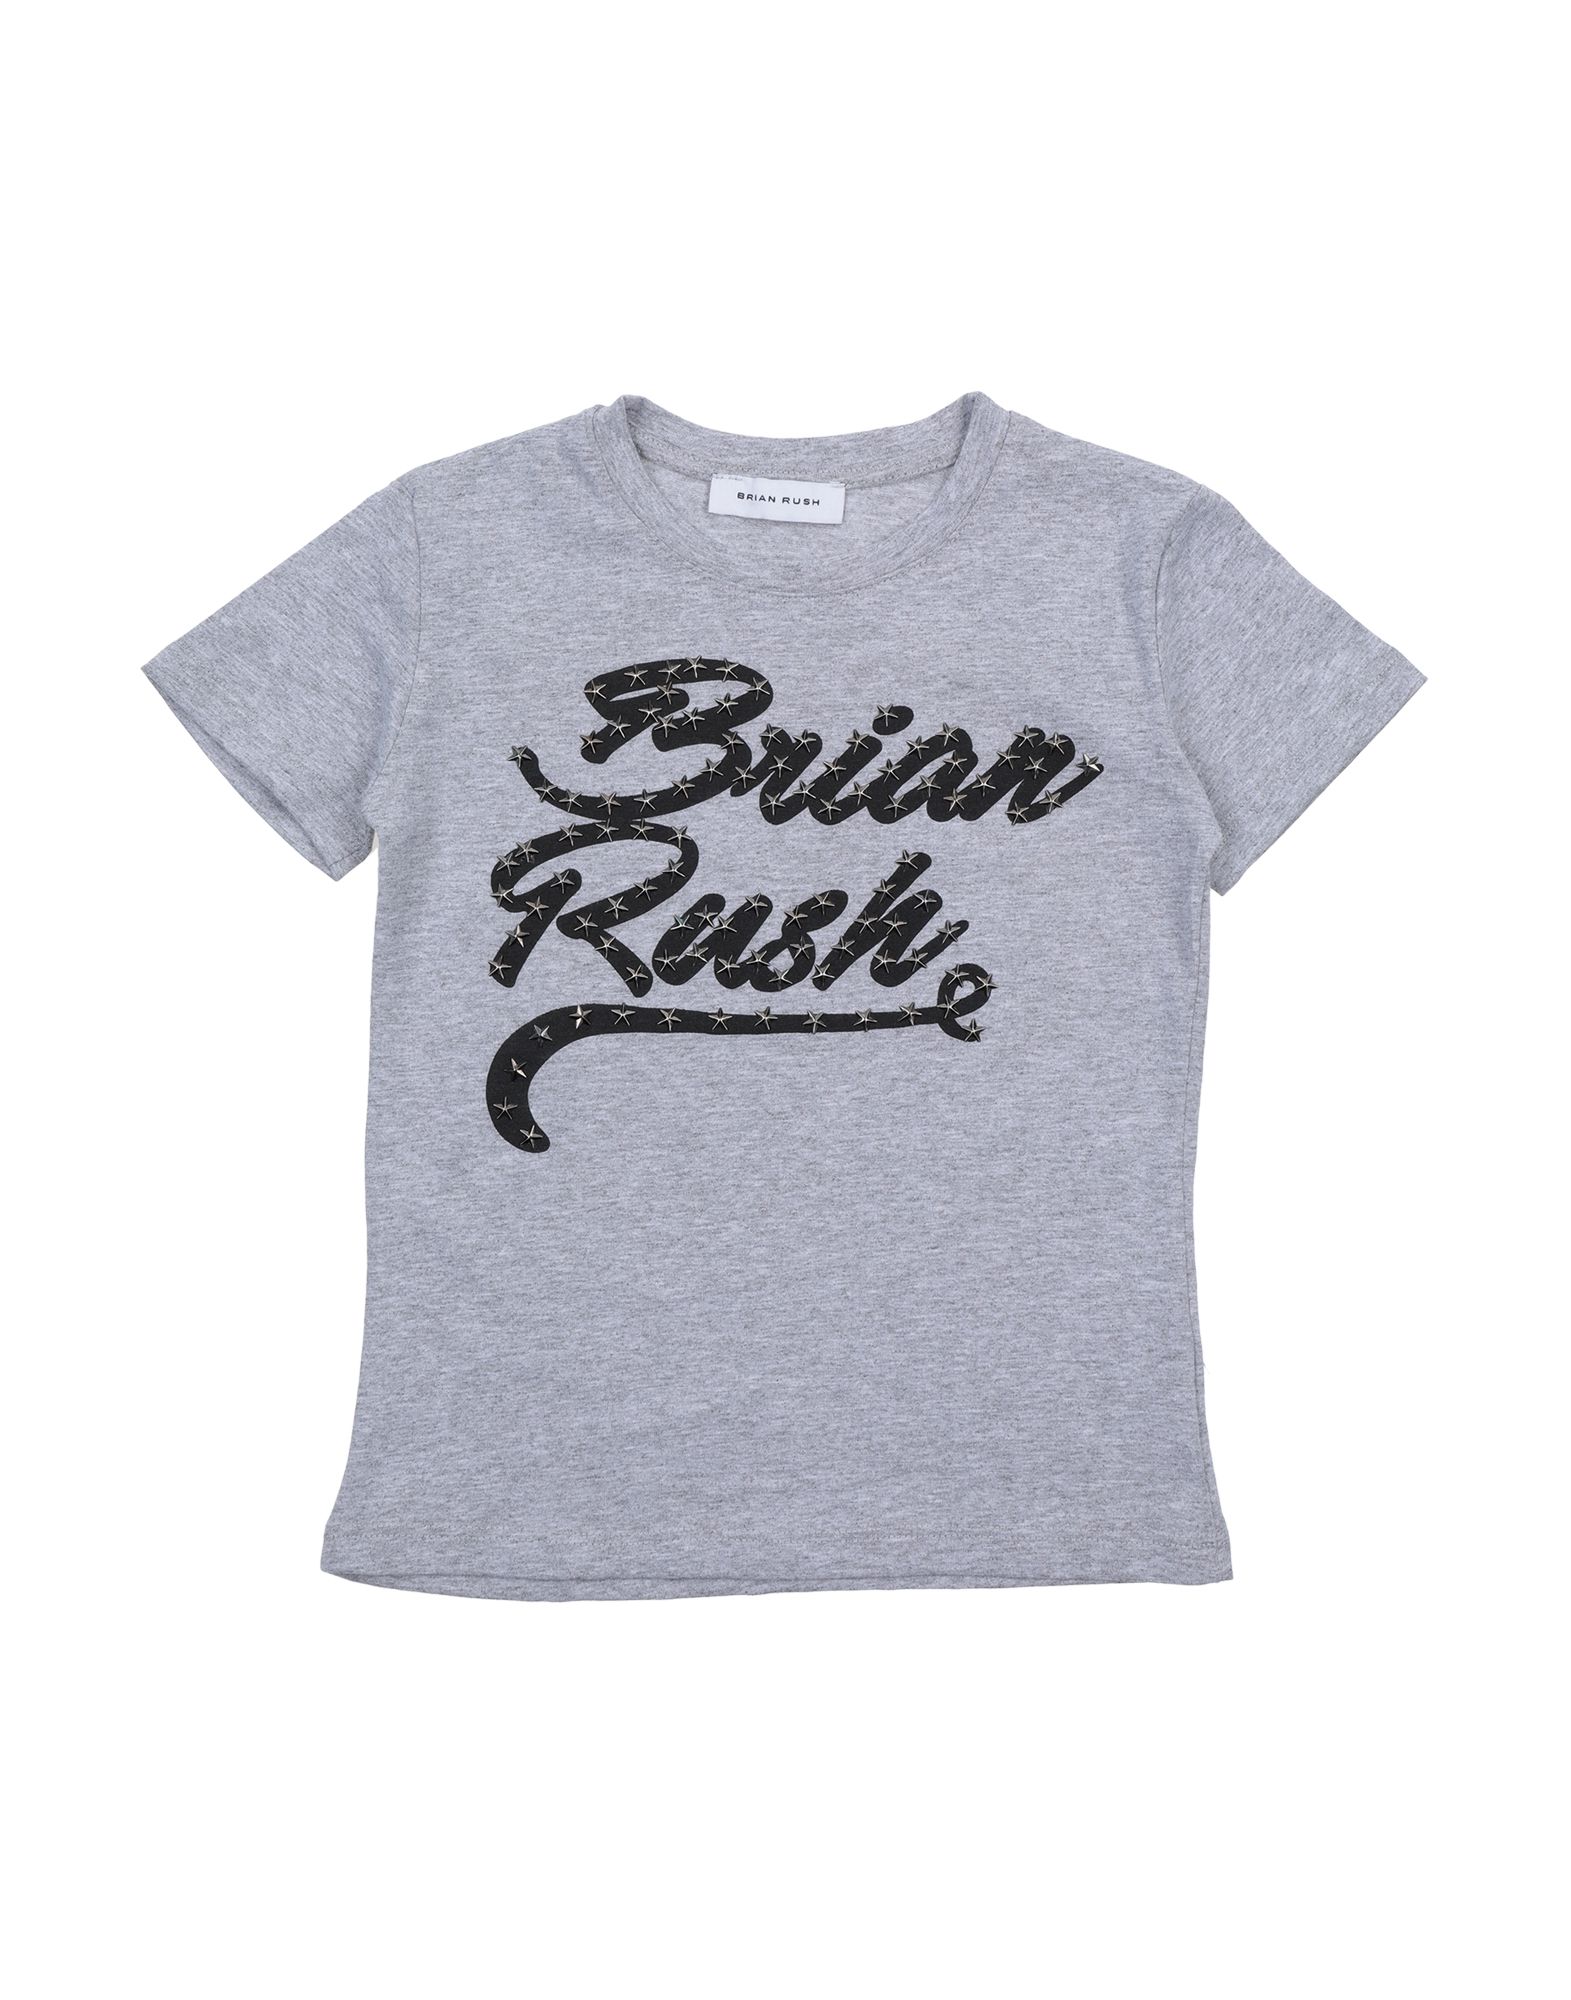 Brian Rush Kids' T-shirts In Grey